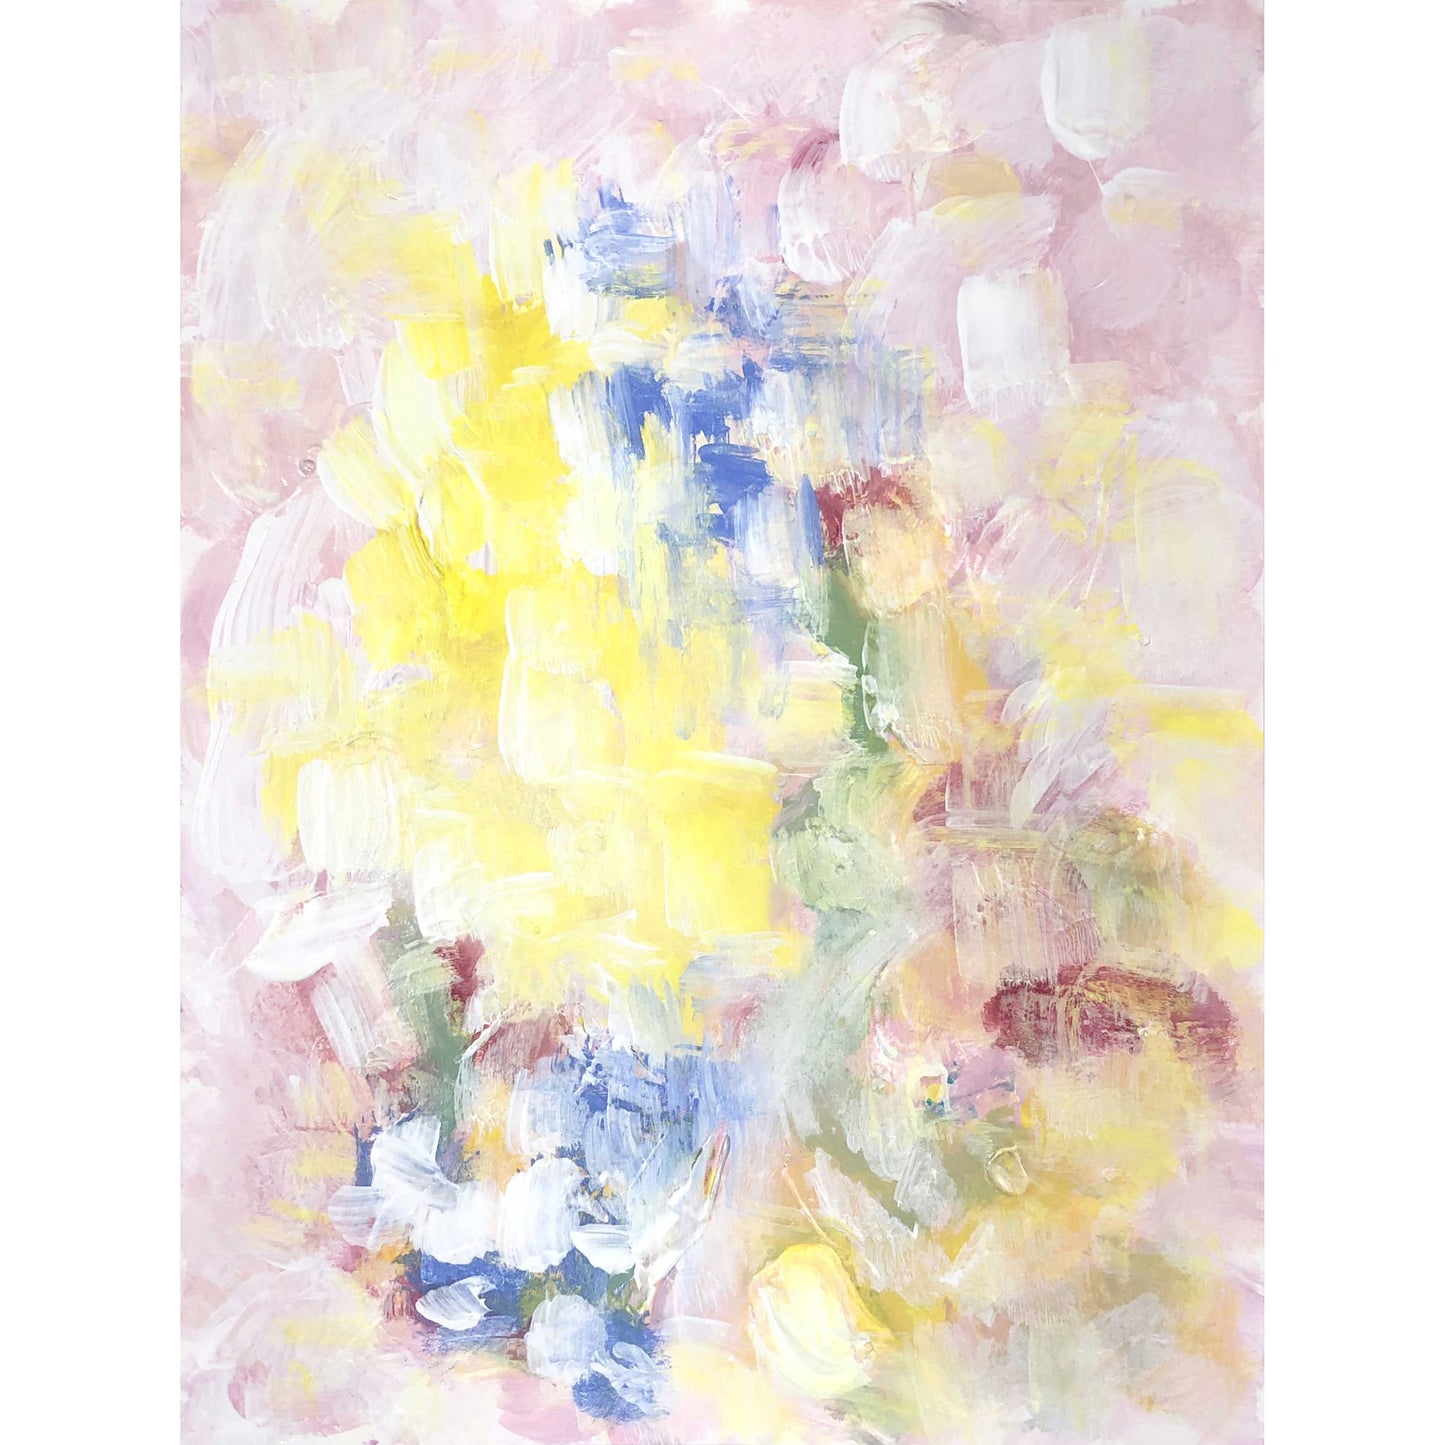 ACP-BL-010 "Bloom" #10 (12x9) Original acrylic abstract painting by Chizu Omori Art